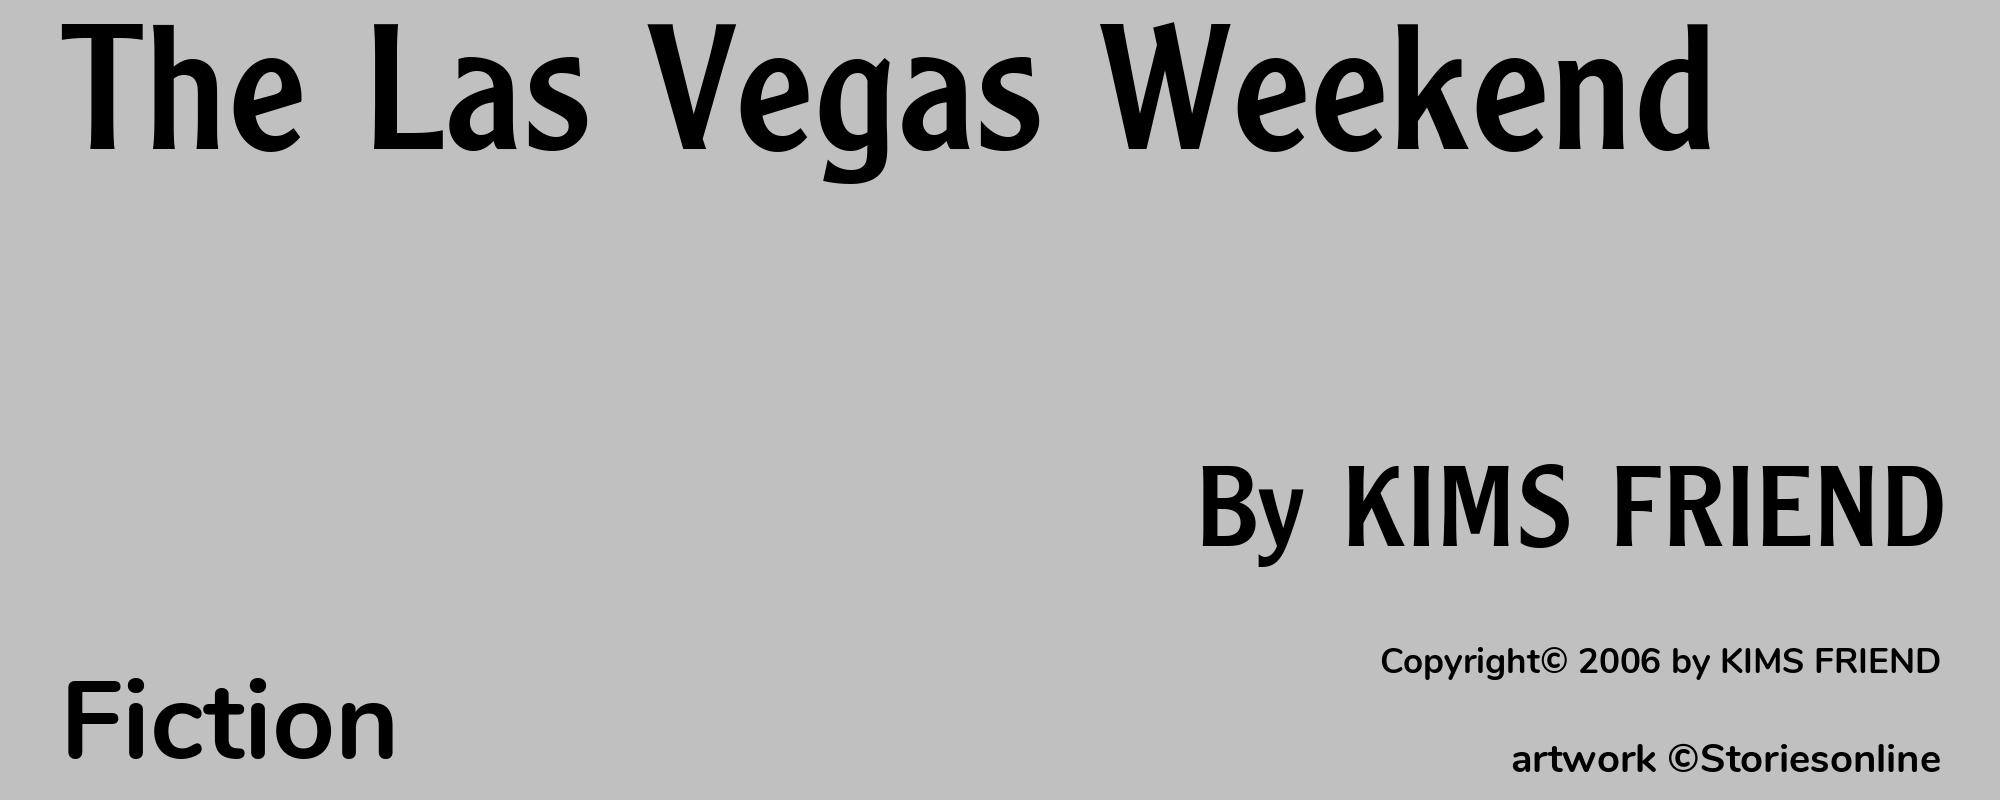 The Las Vegas Weekend - Cover